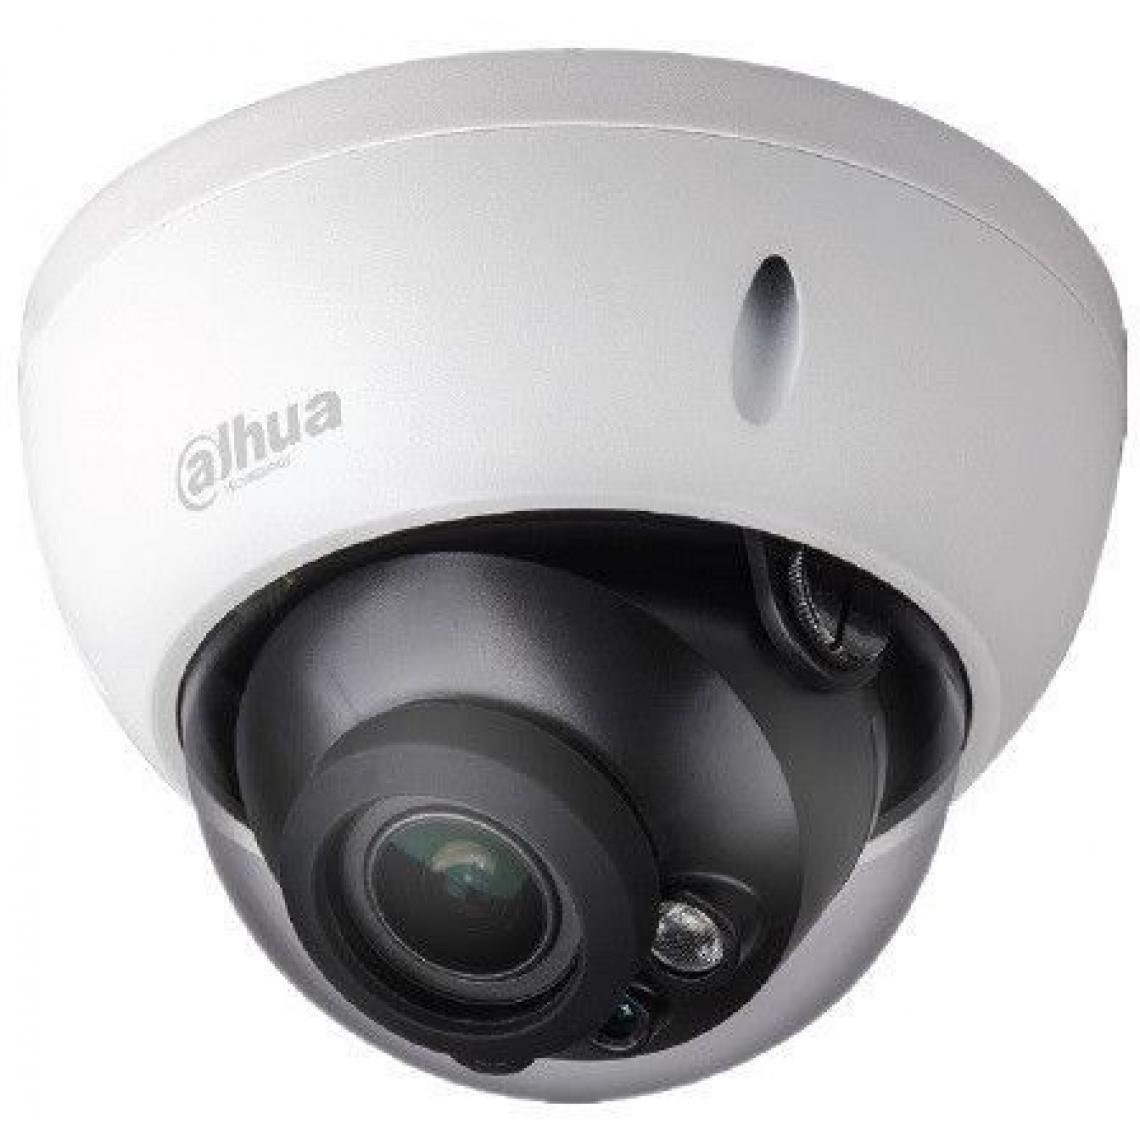 Dahua - CAMERA DAHUA HACHDBW 1400 R-Z-S 2 - Caméra de surveillance connectée